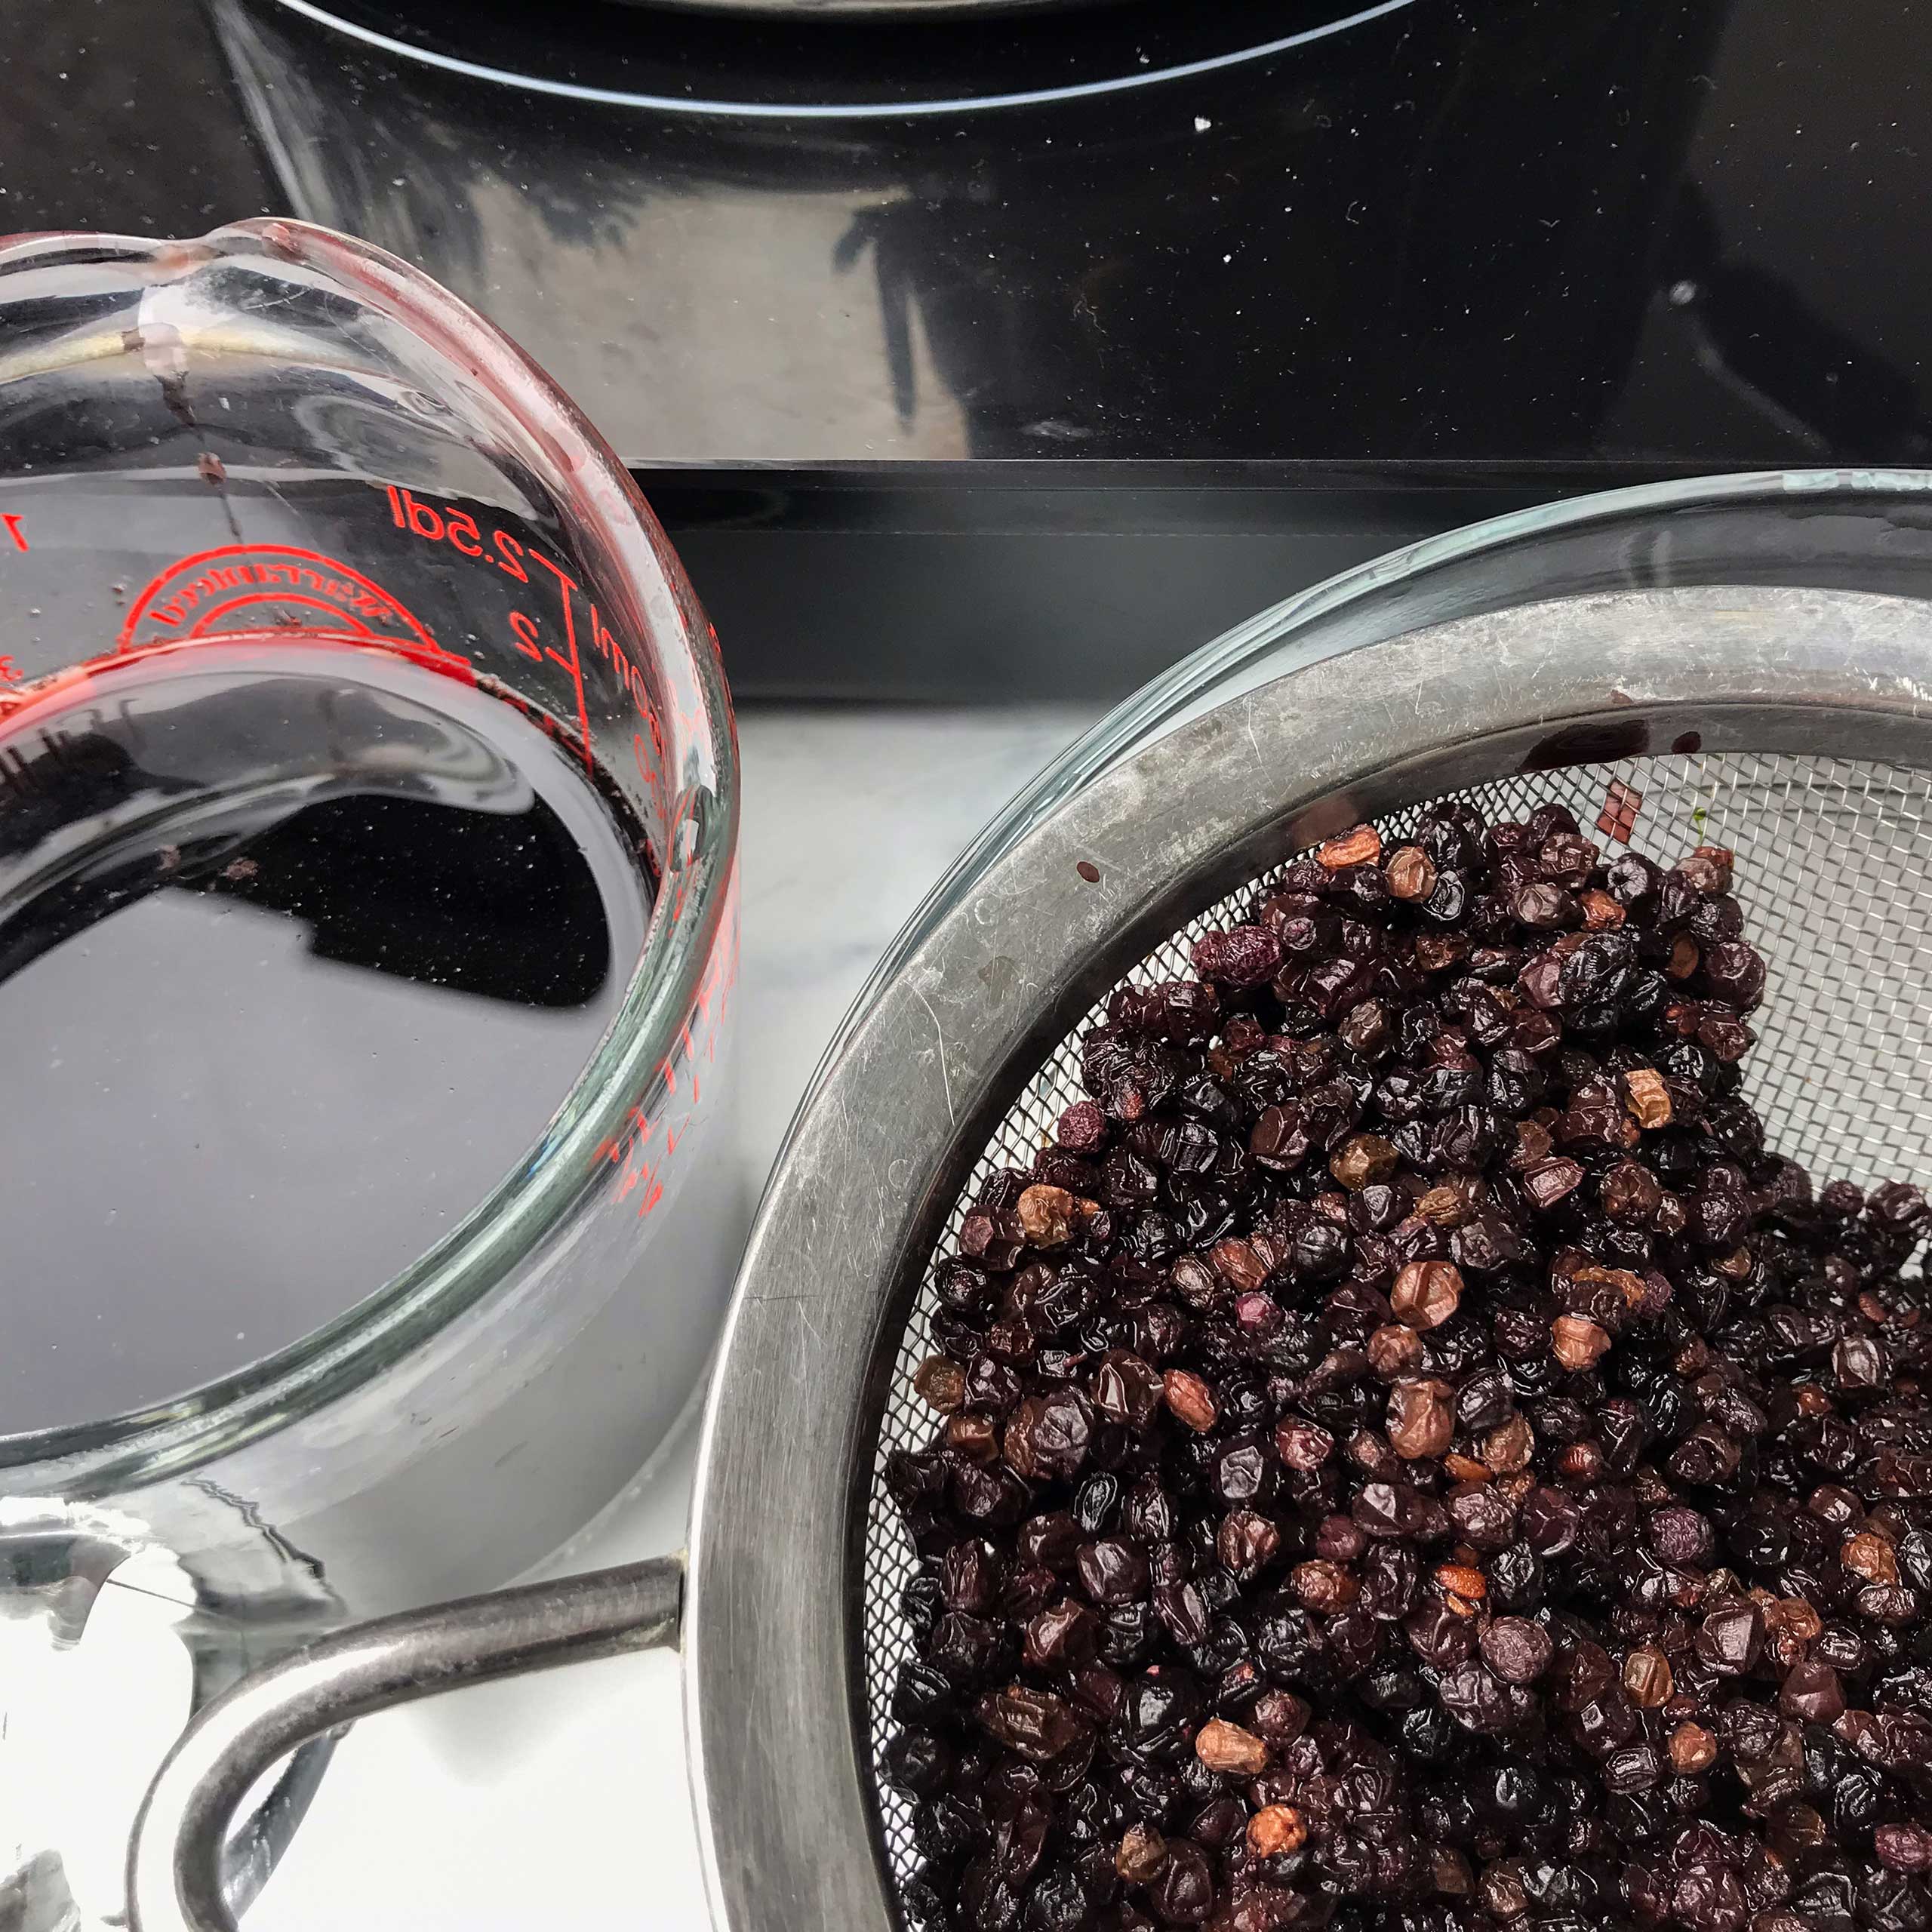 elderberries drained in sifter next to glass of elderberry soaking water